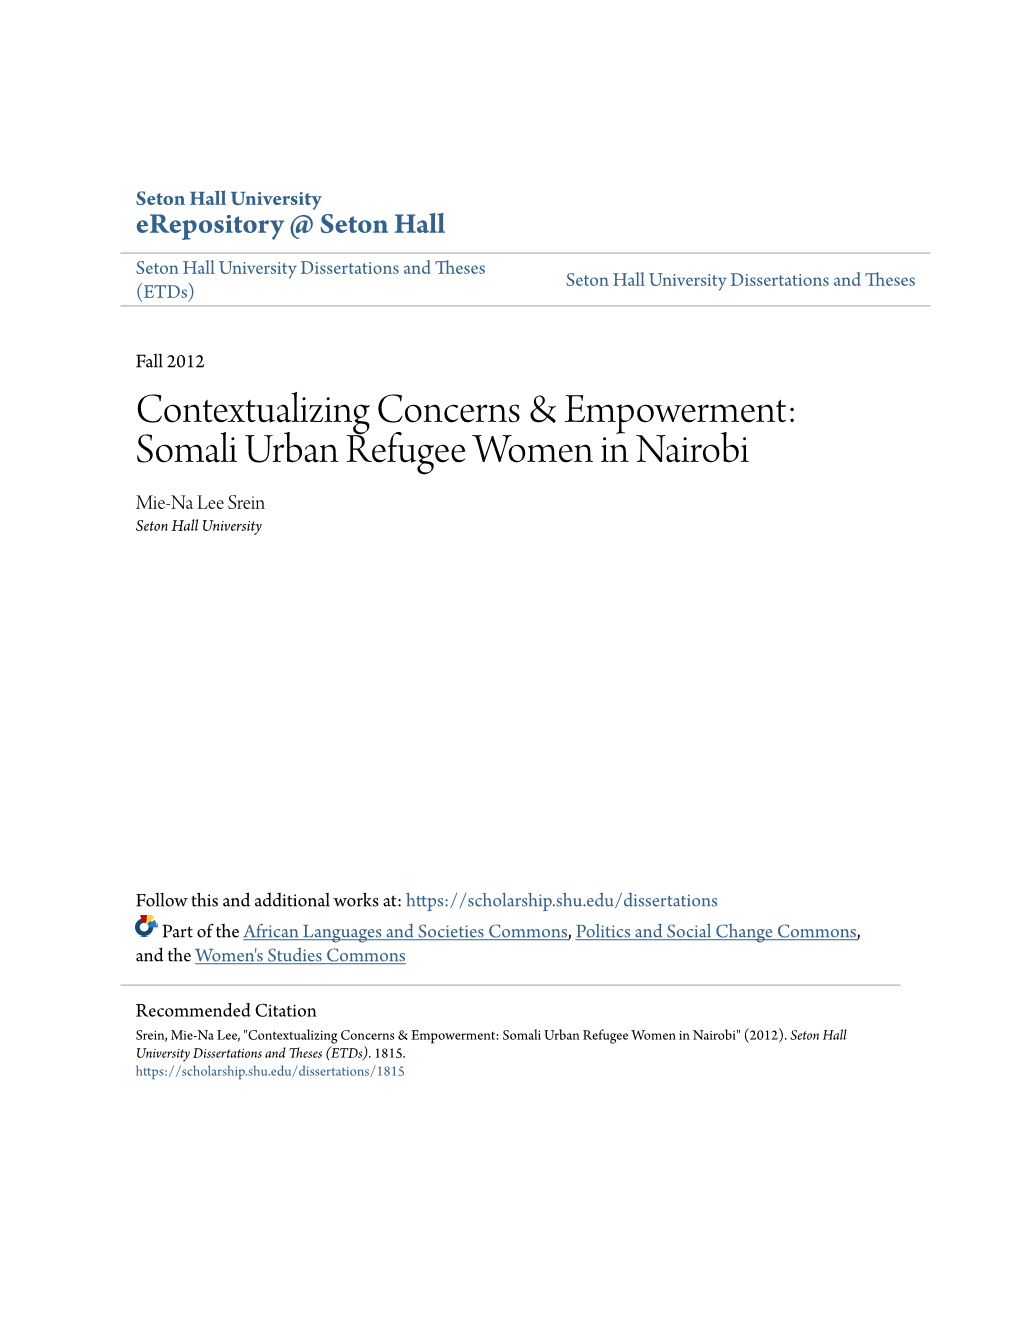 Contextualizing Concerns & Empowerment: Somali Urban Refugee Women in Nairobi